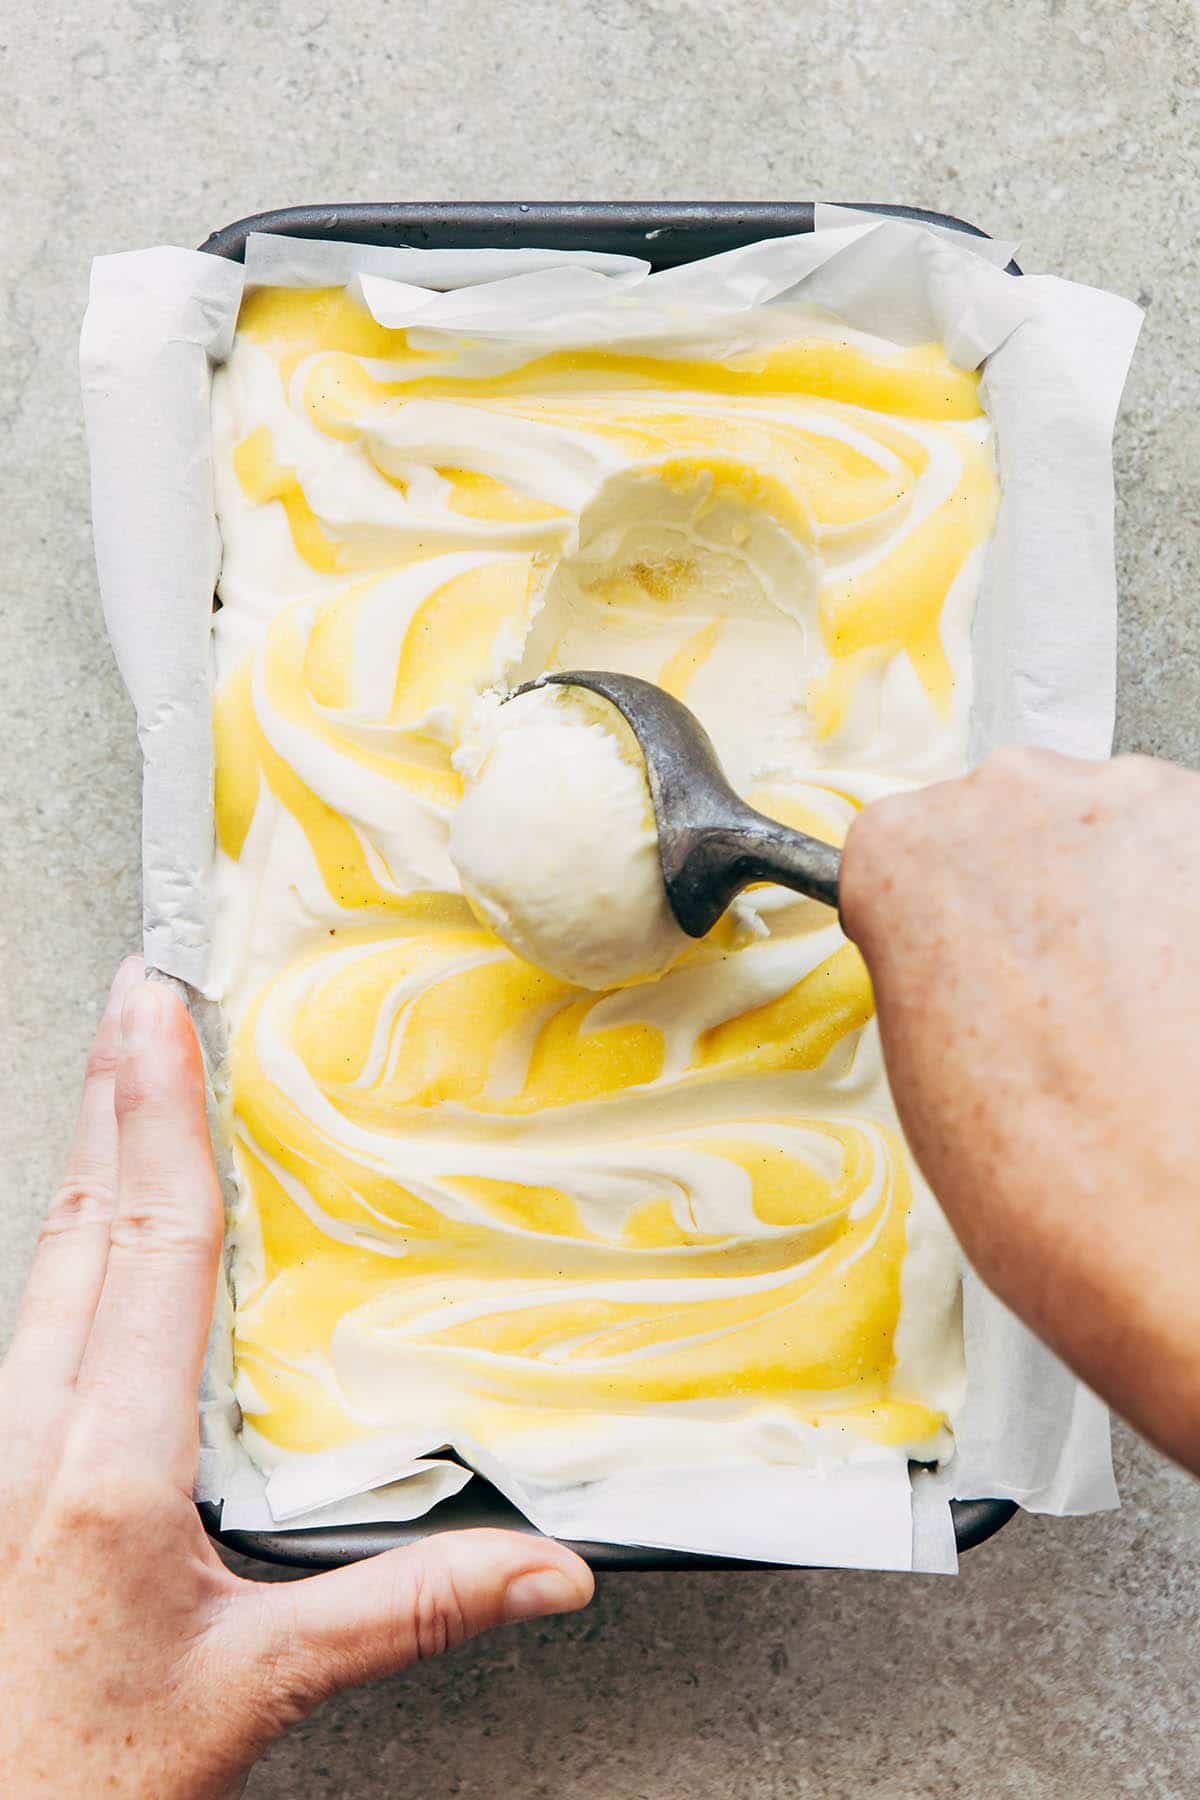 A hand scooping ice cream.